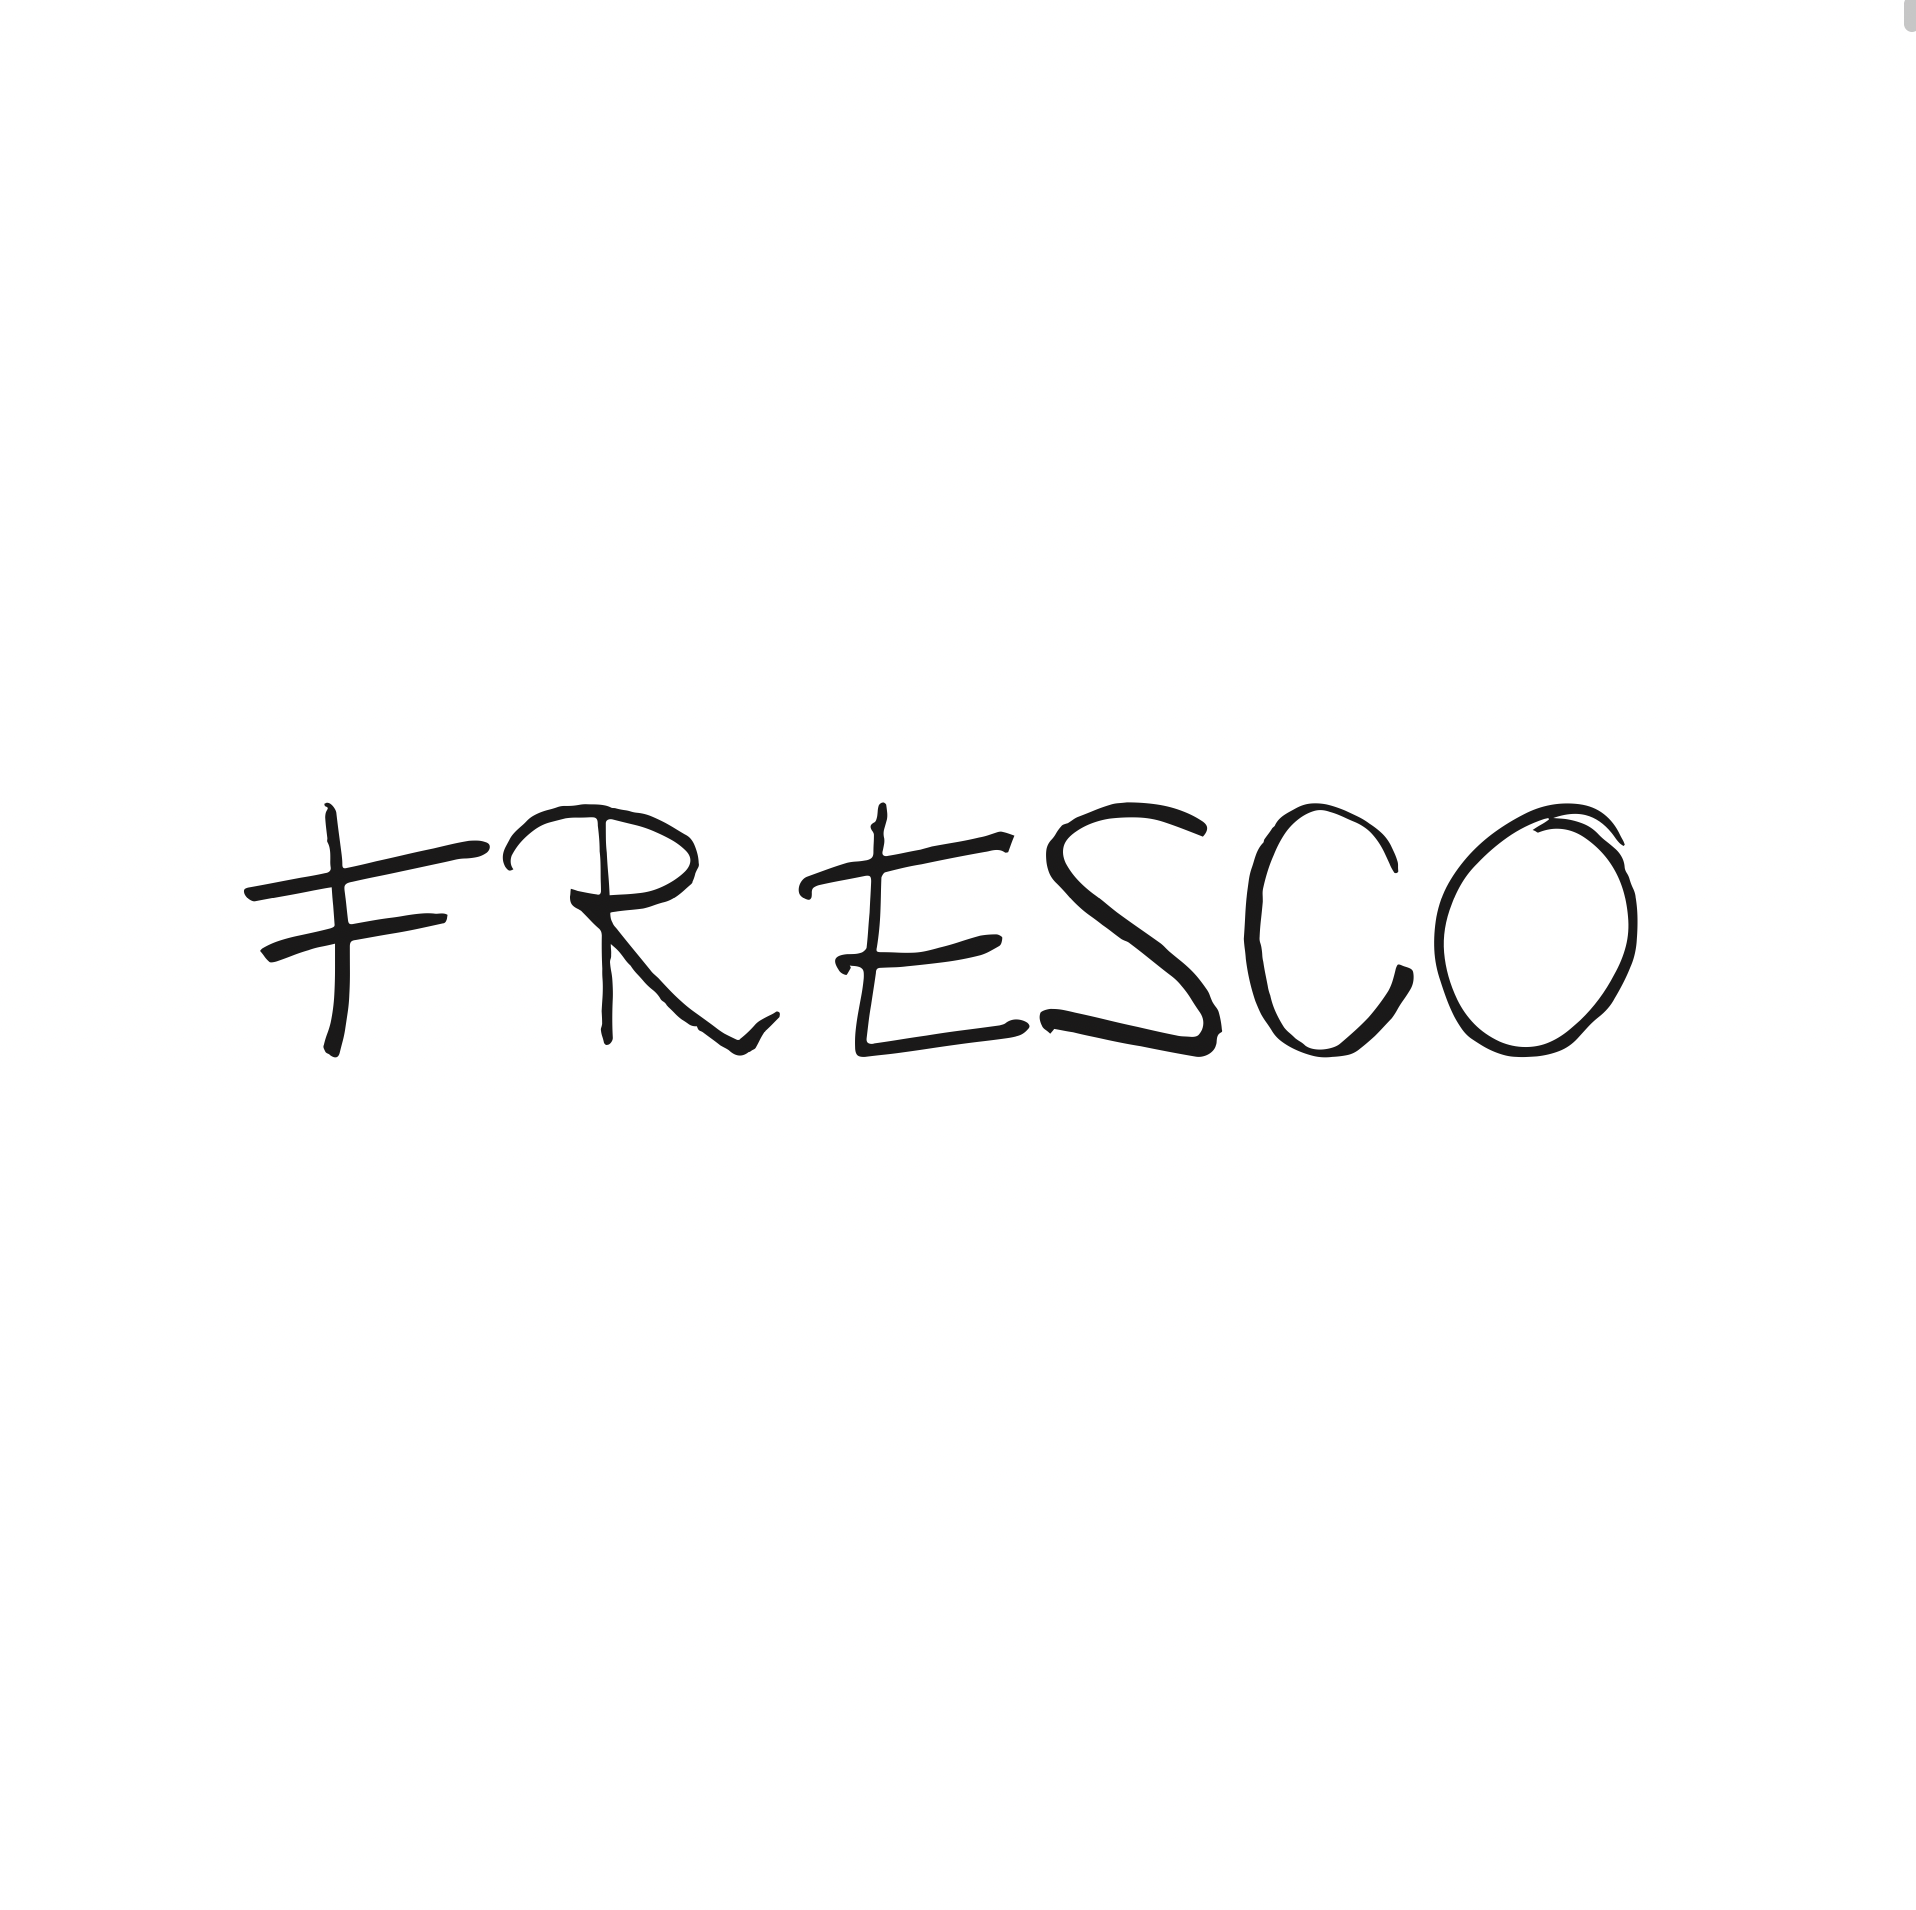 Fresco (2020)